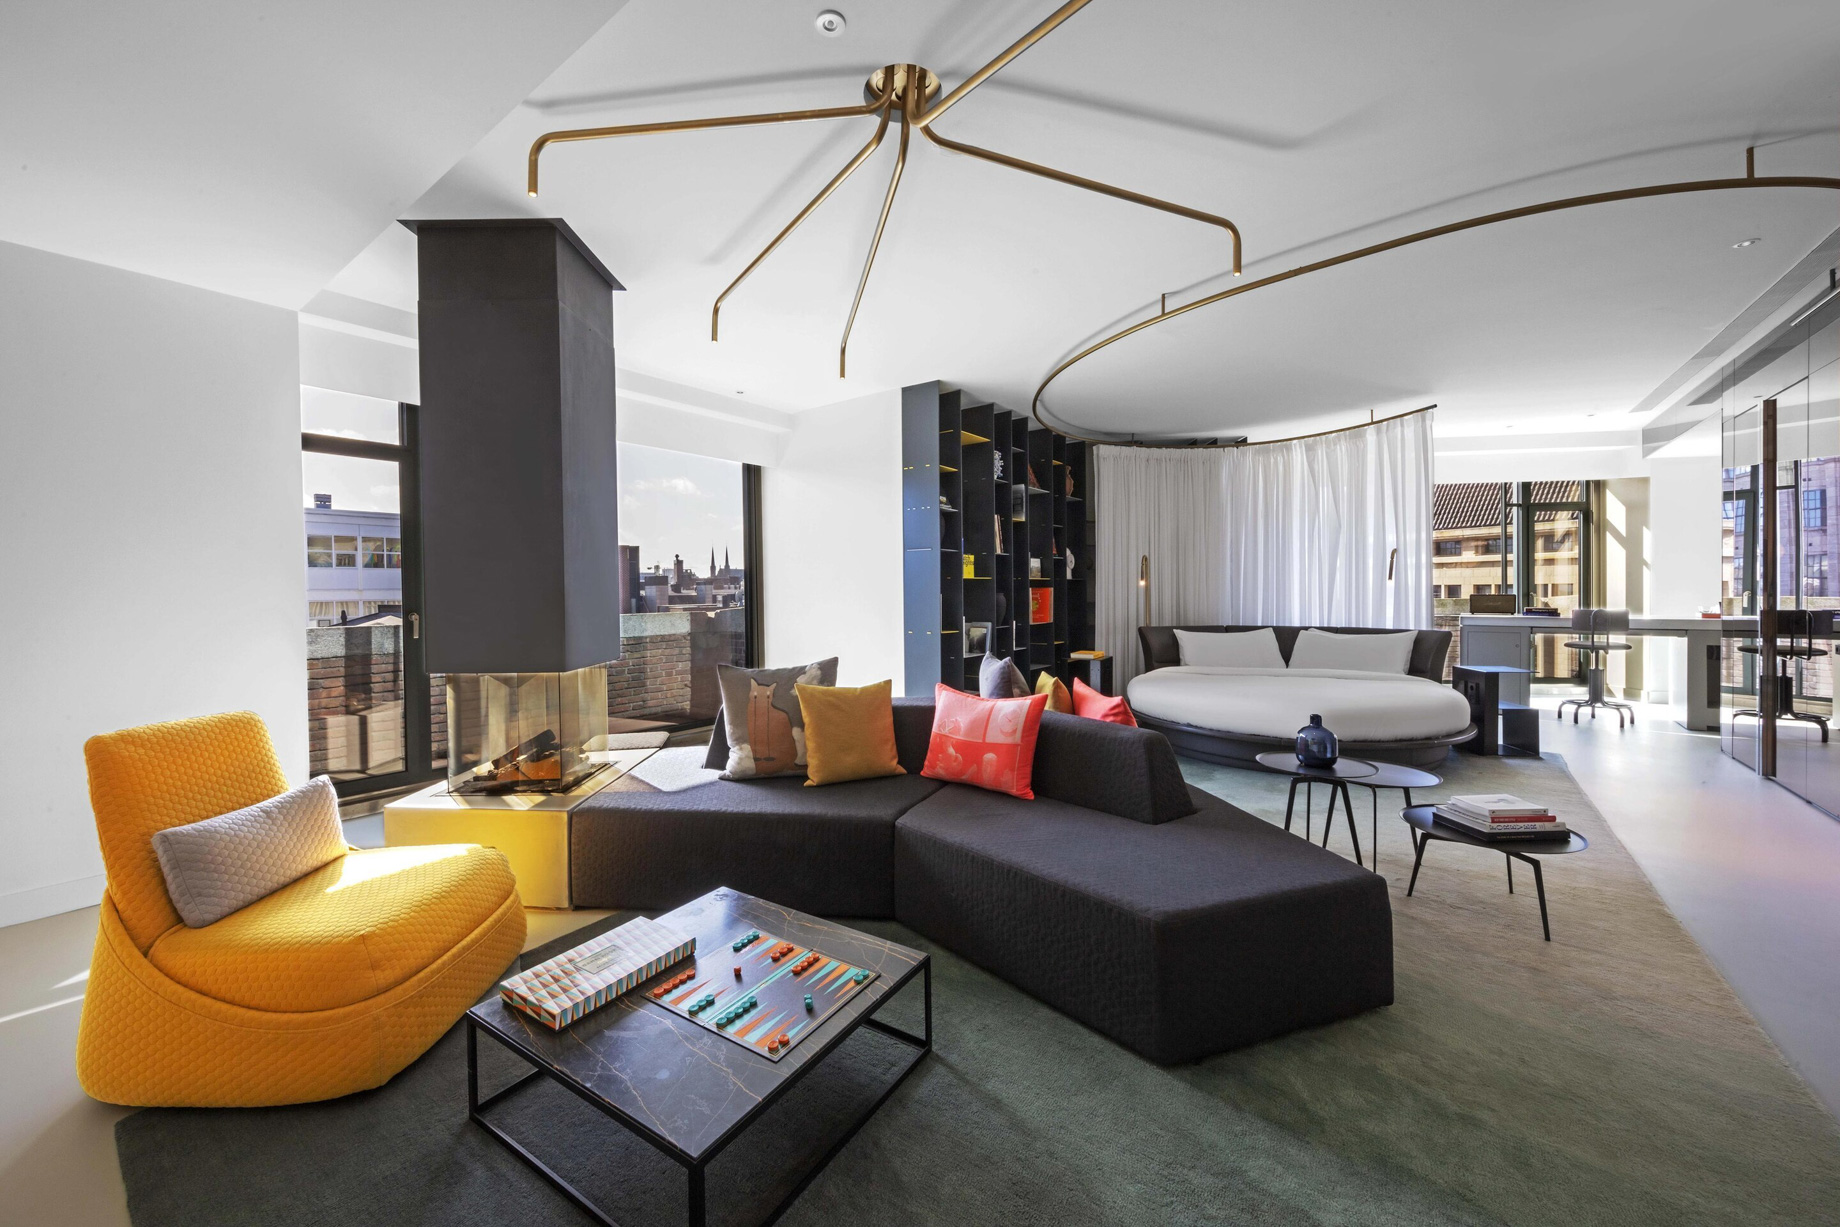 W Amsterdam Hotel - Amsterdam, Netherlands - WOW Exchange One Bedroom Studio Suite